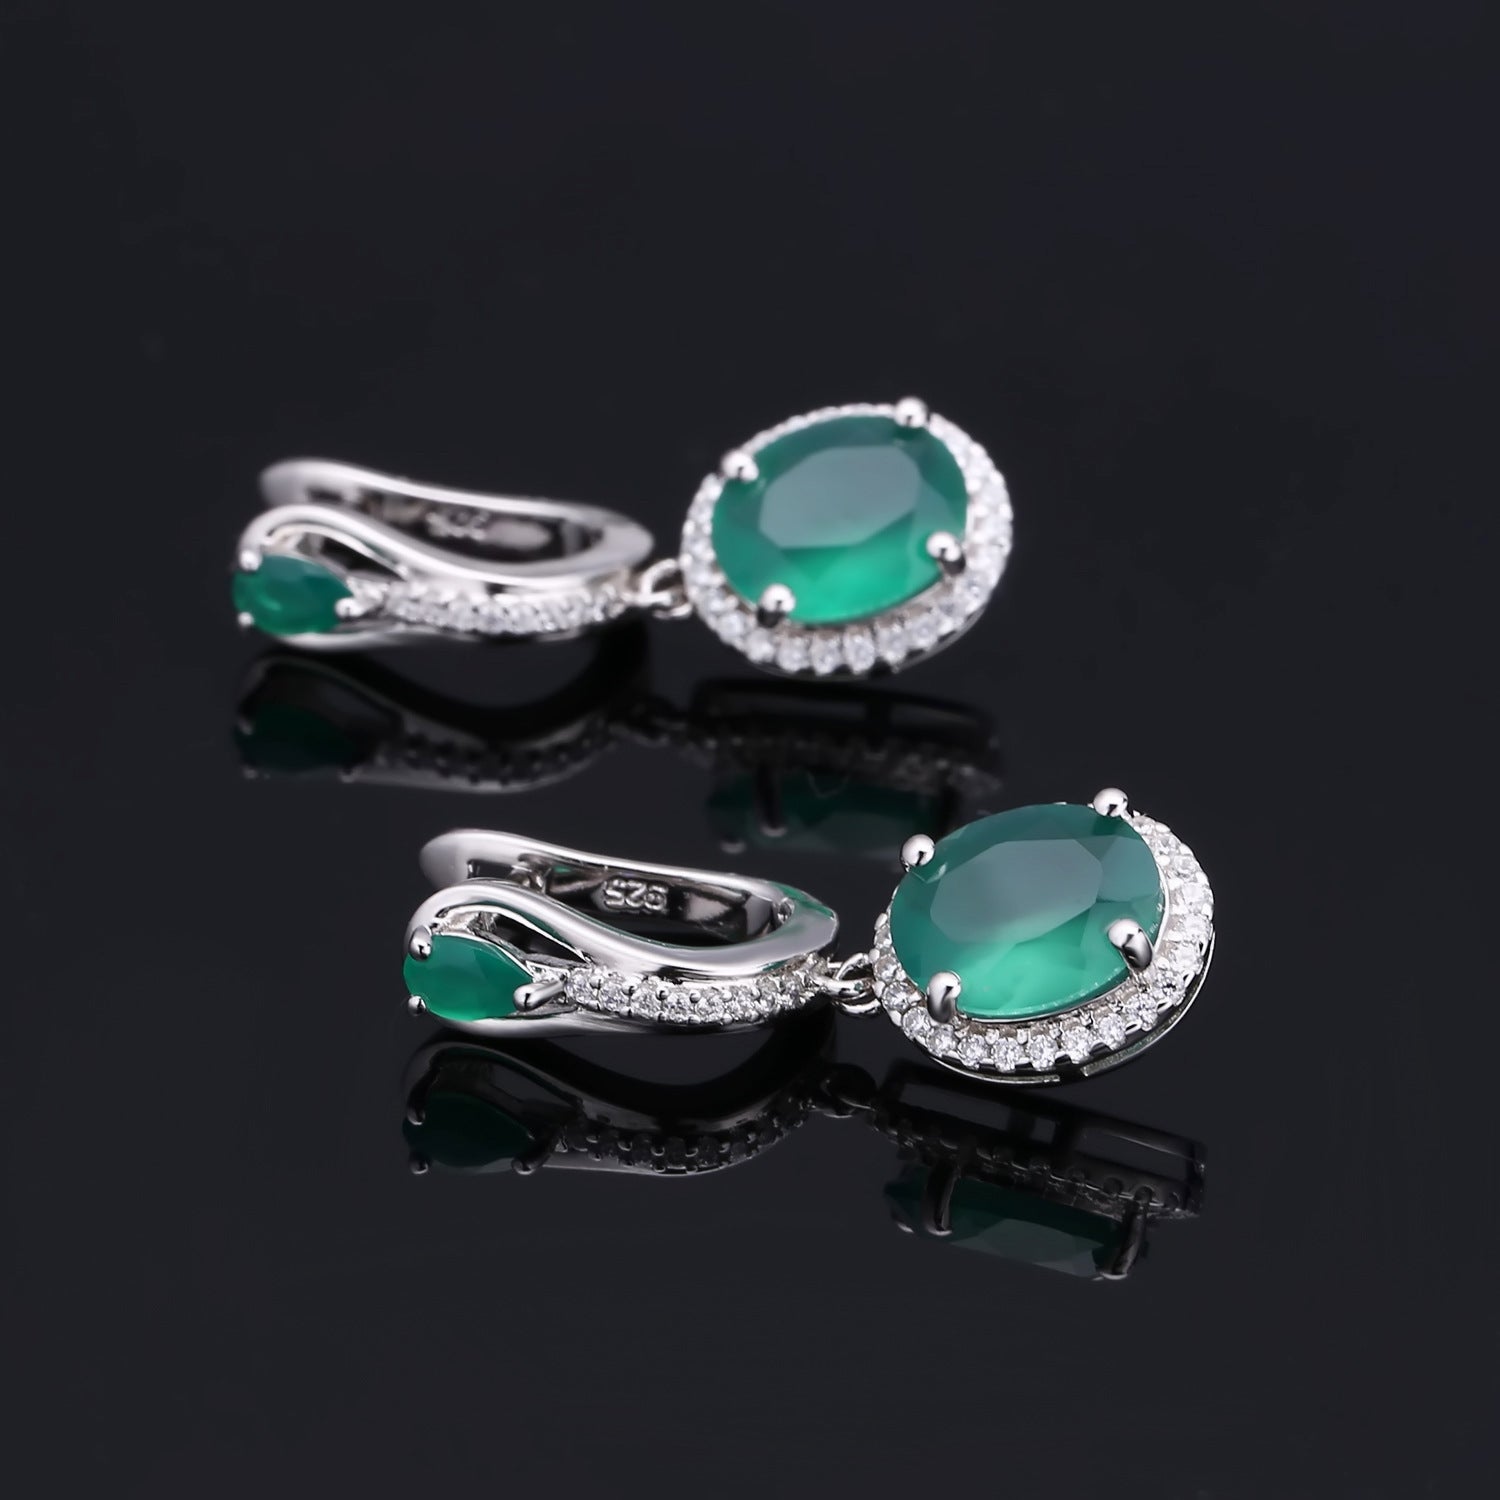 Natural Green Agate Soleste Halo Oval Shape Silver Drop Earrings for Women